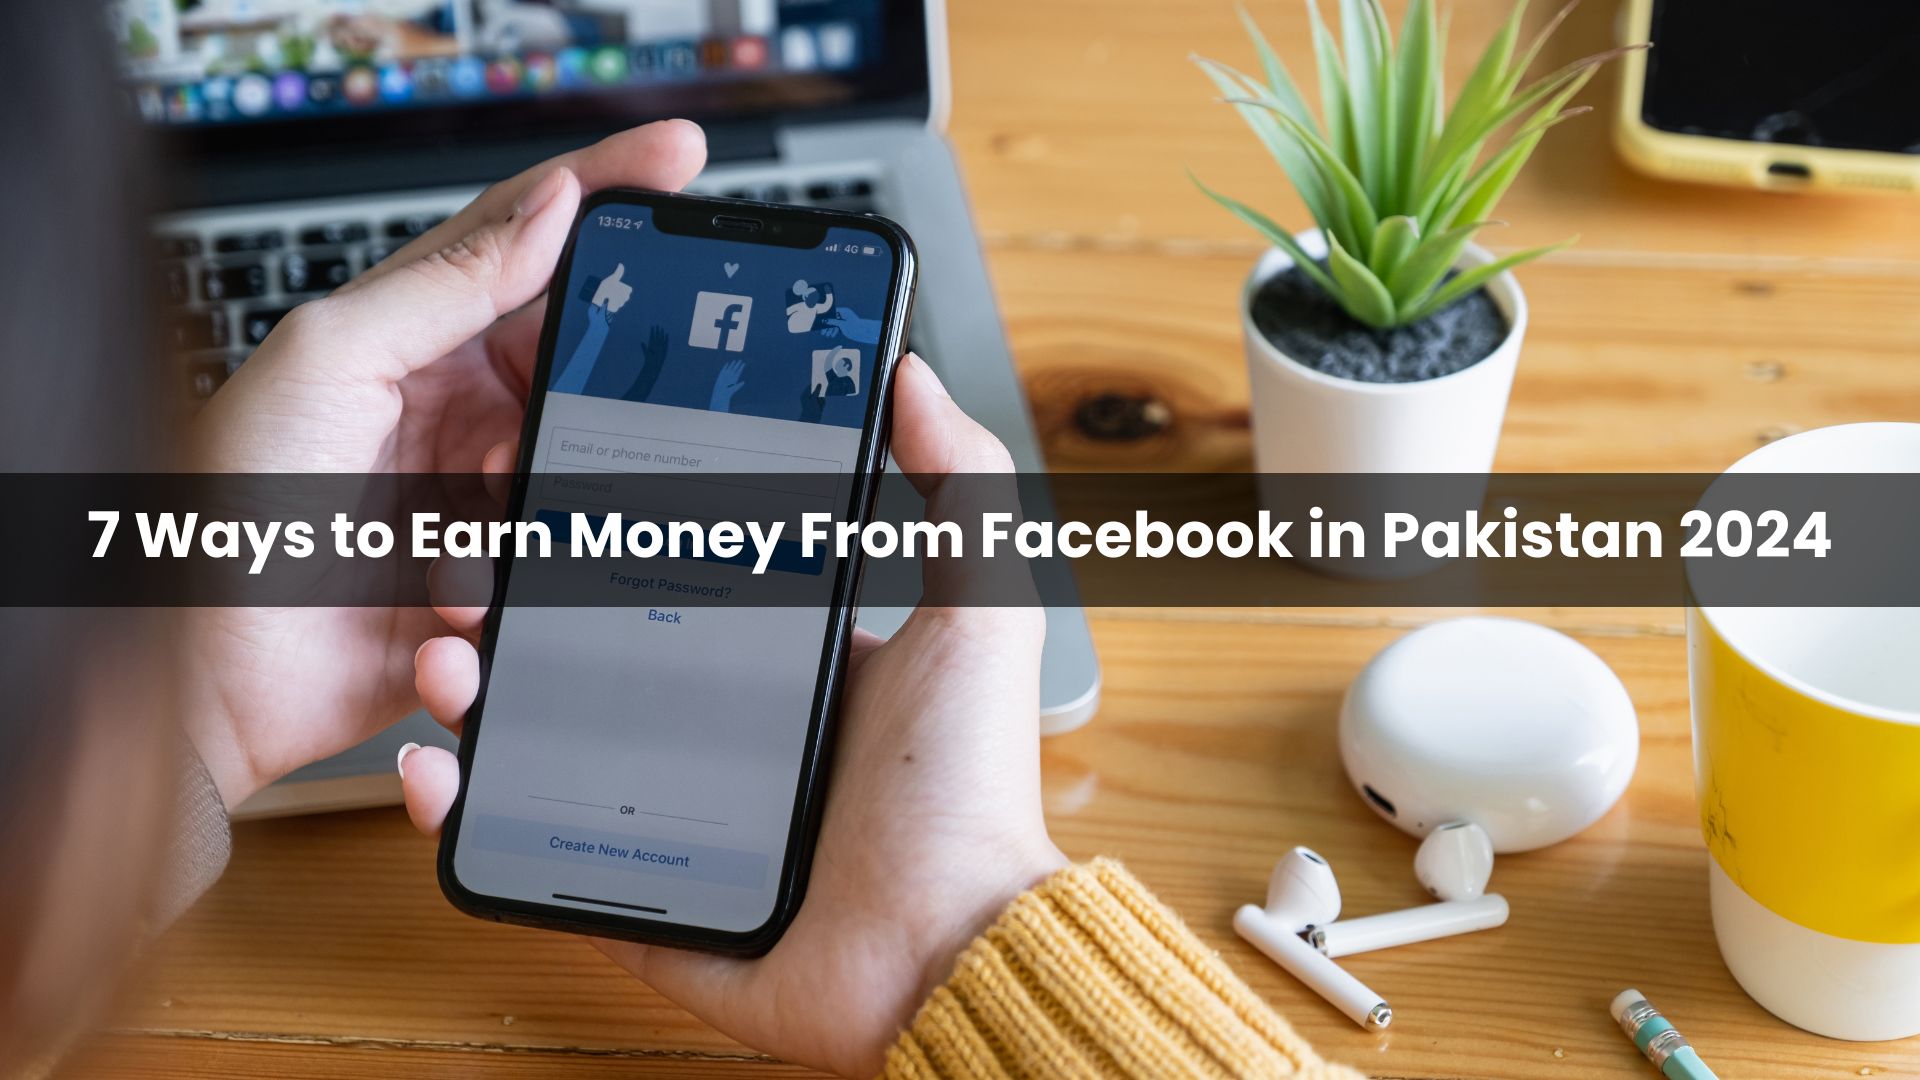 7 Ways to Earn Money From Facebook in Pakistan 2024